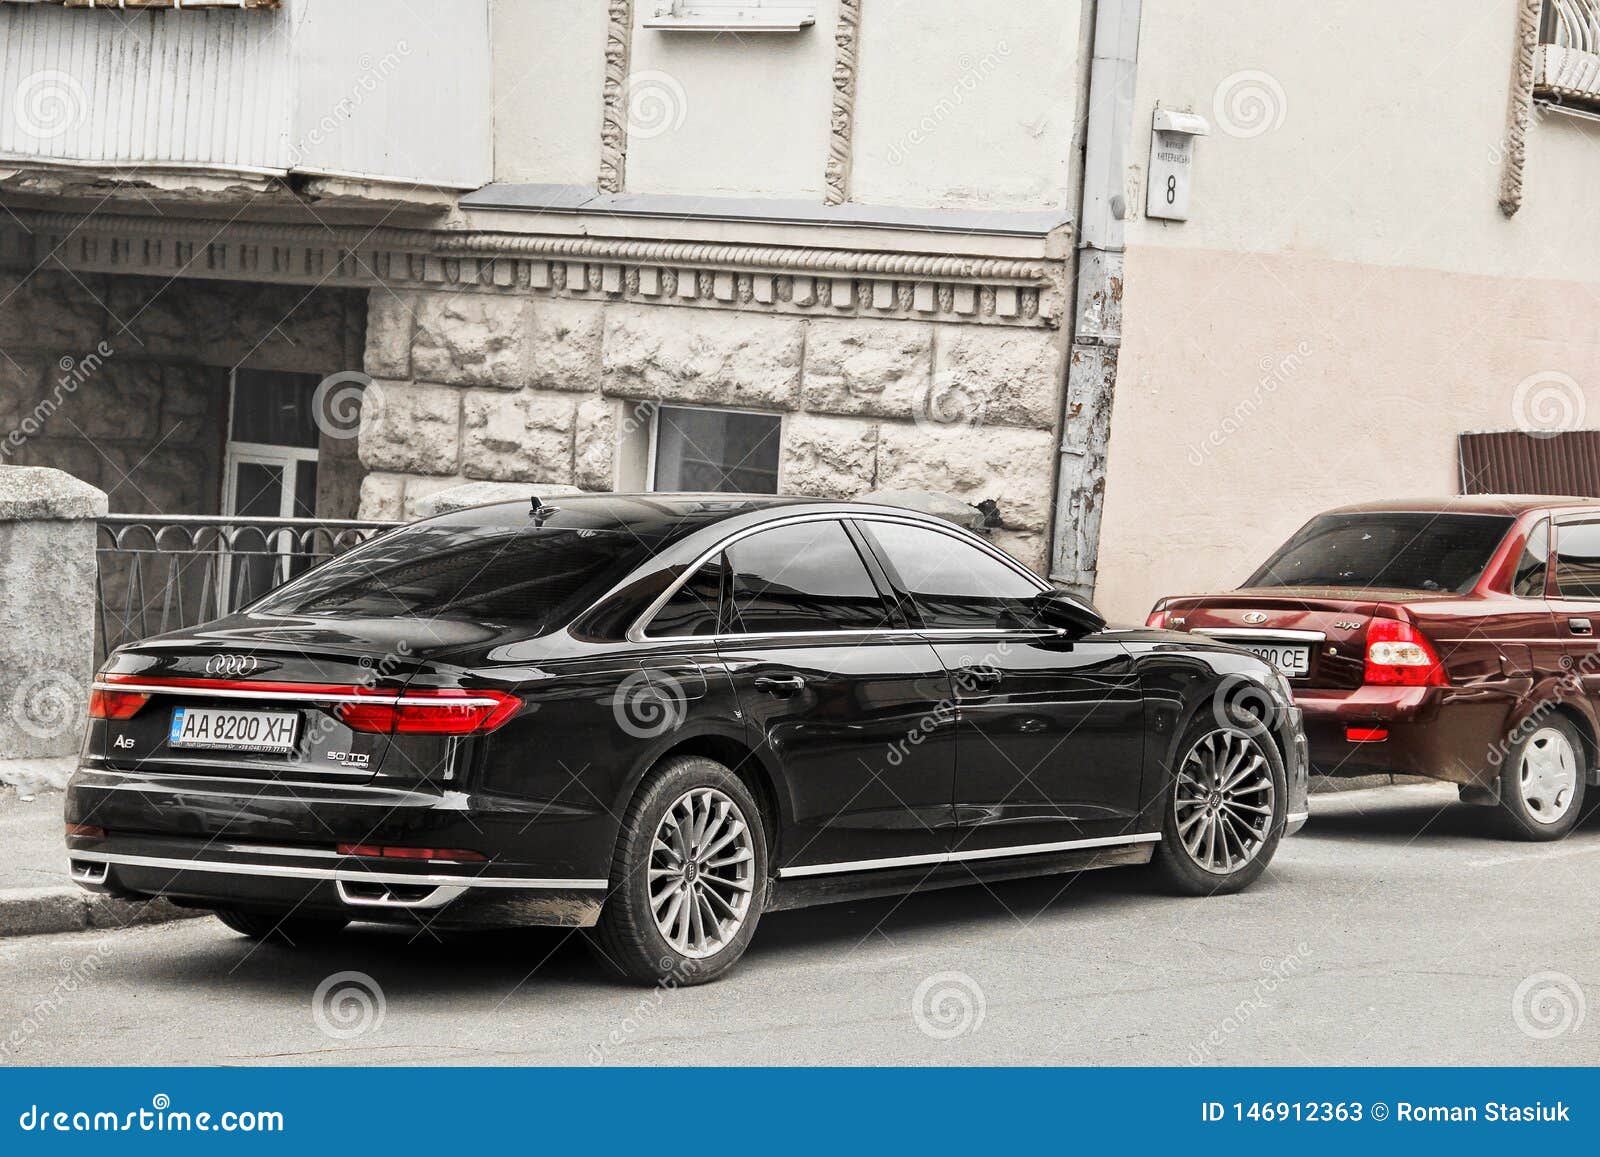 Kiev Ukraine May 3 2019 Black Audi A8 Parked In The City Center Editorial Stock Photo Image Of Detail Kiev 146912363